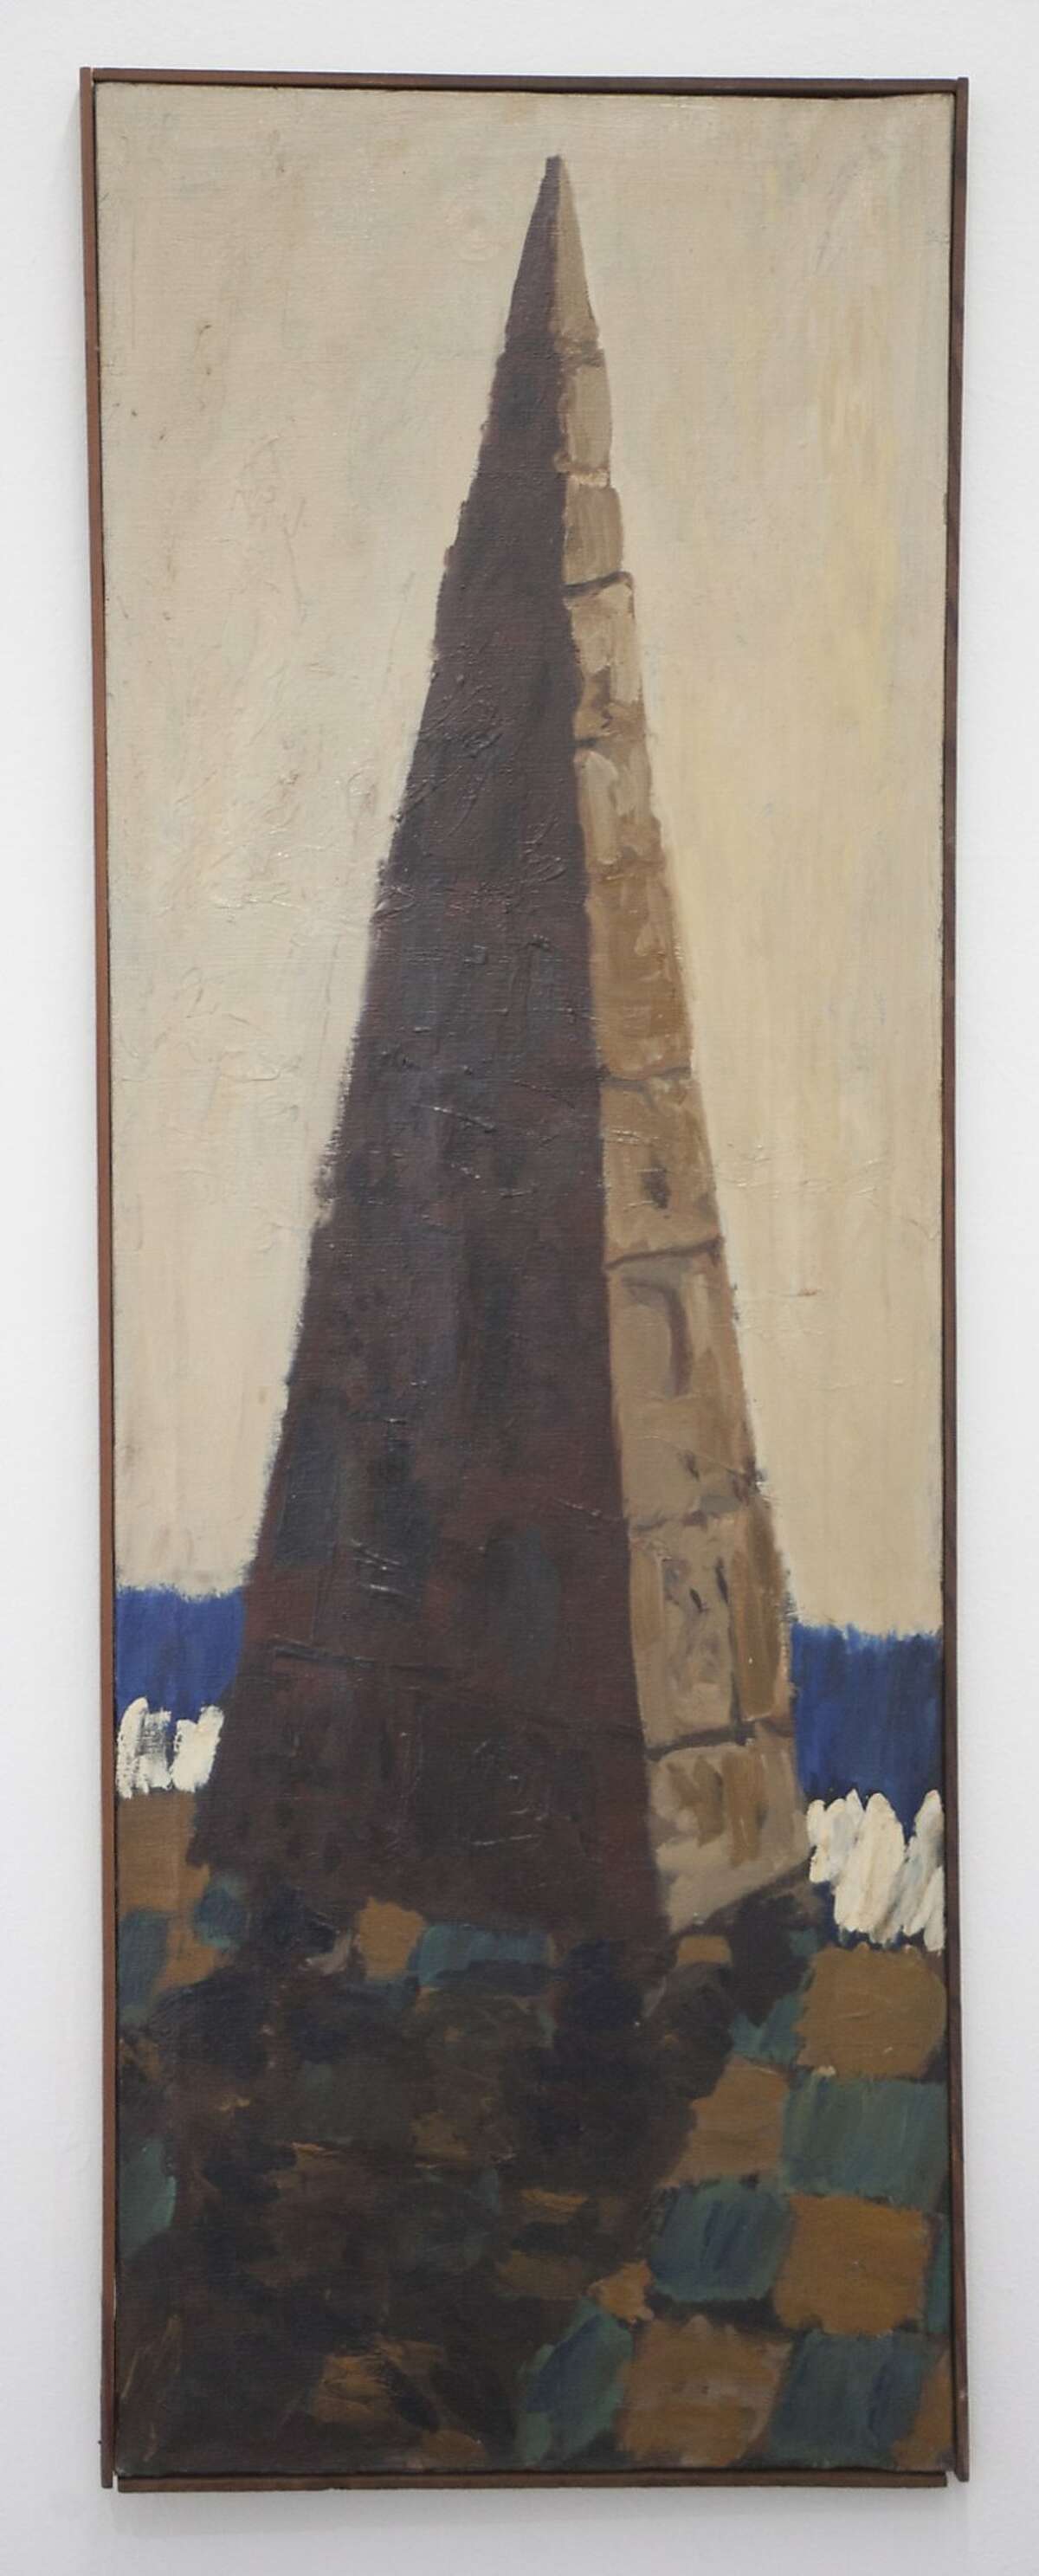 Fred Martin. “Untitled (Pyramid).” Circa 1955. Oil on Canvas (23” x 64”).